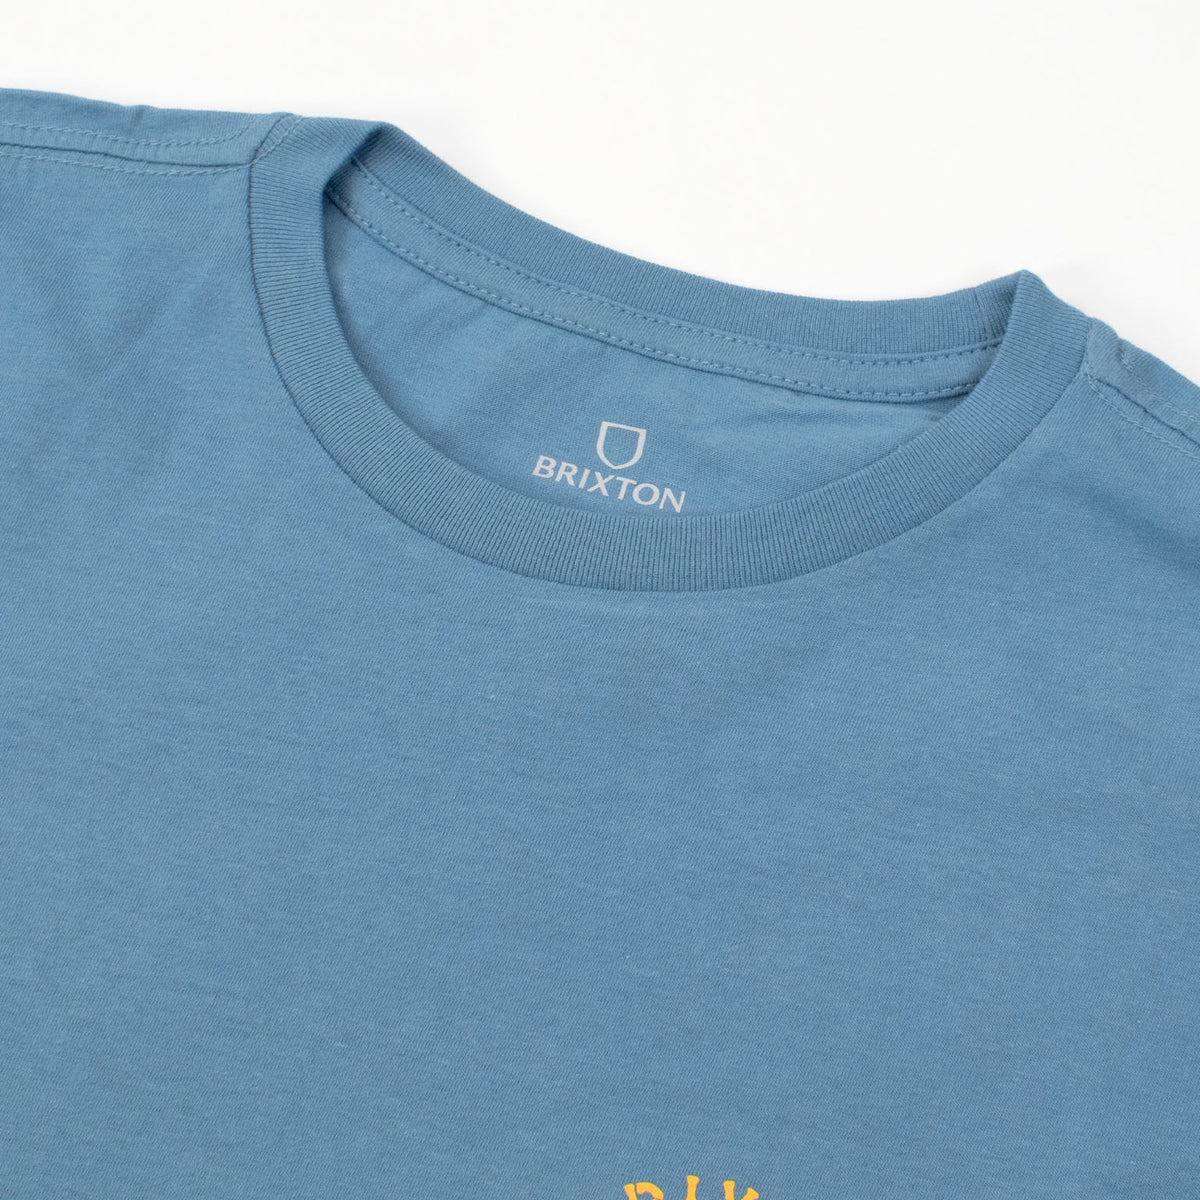 BRIXTON AUSTIN S/S TLRT BLUE HEAVEN 100%綿 テイラードフィットTシャツ (16919)